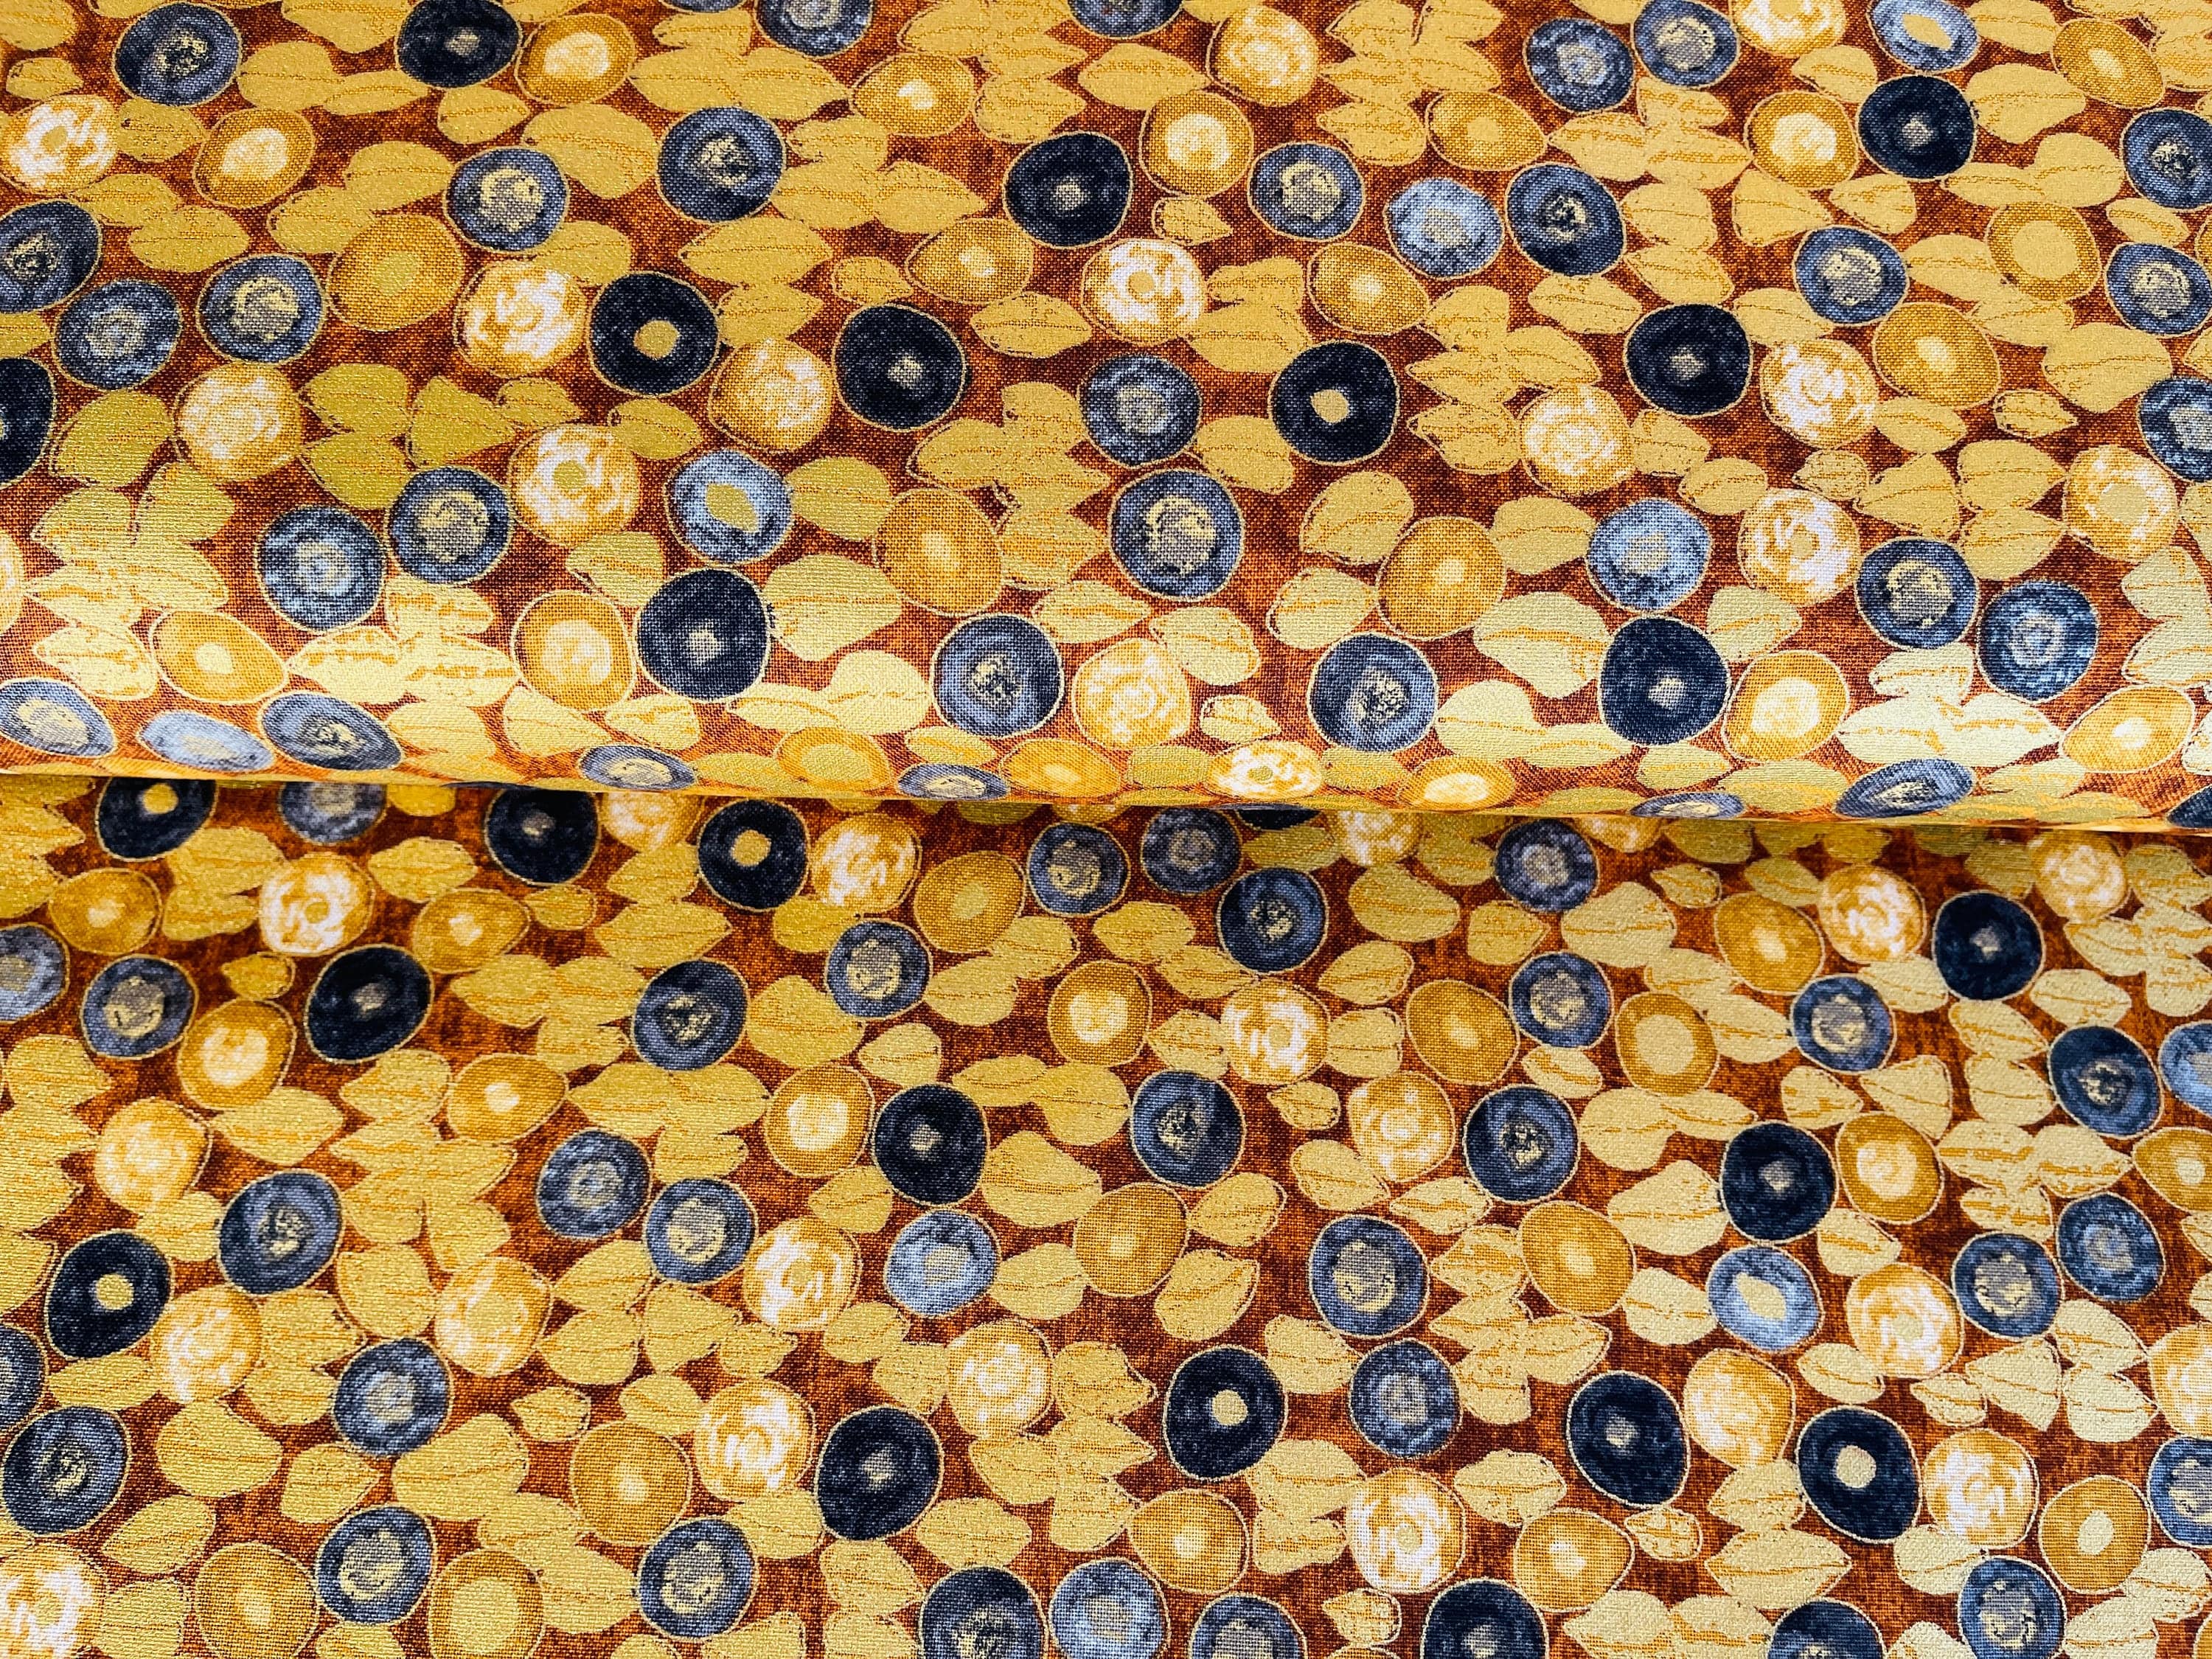 Gustav Klimt - Gold - Robert Kaufman - Quilting Cotton Fabric - G1770012